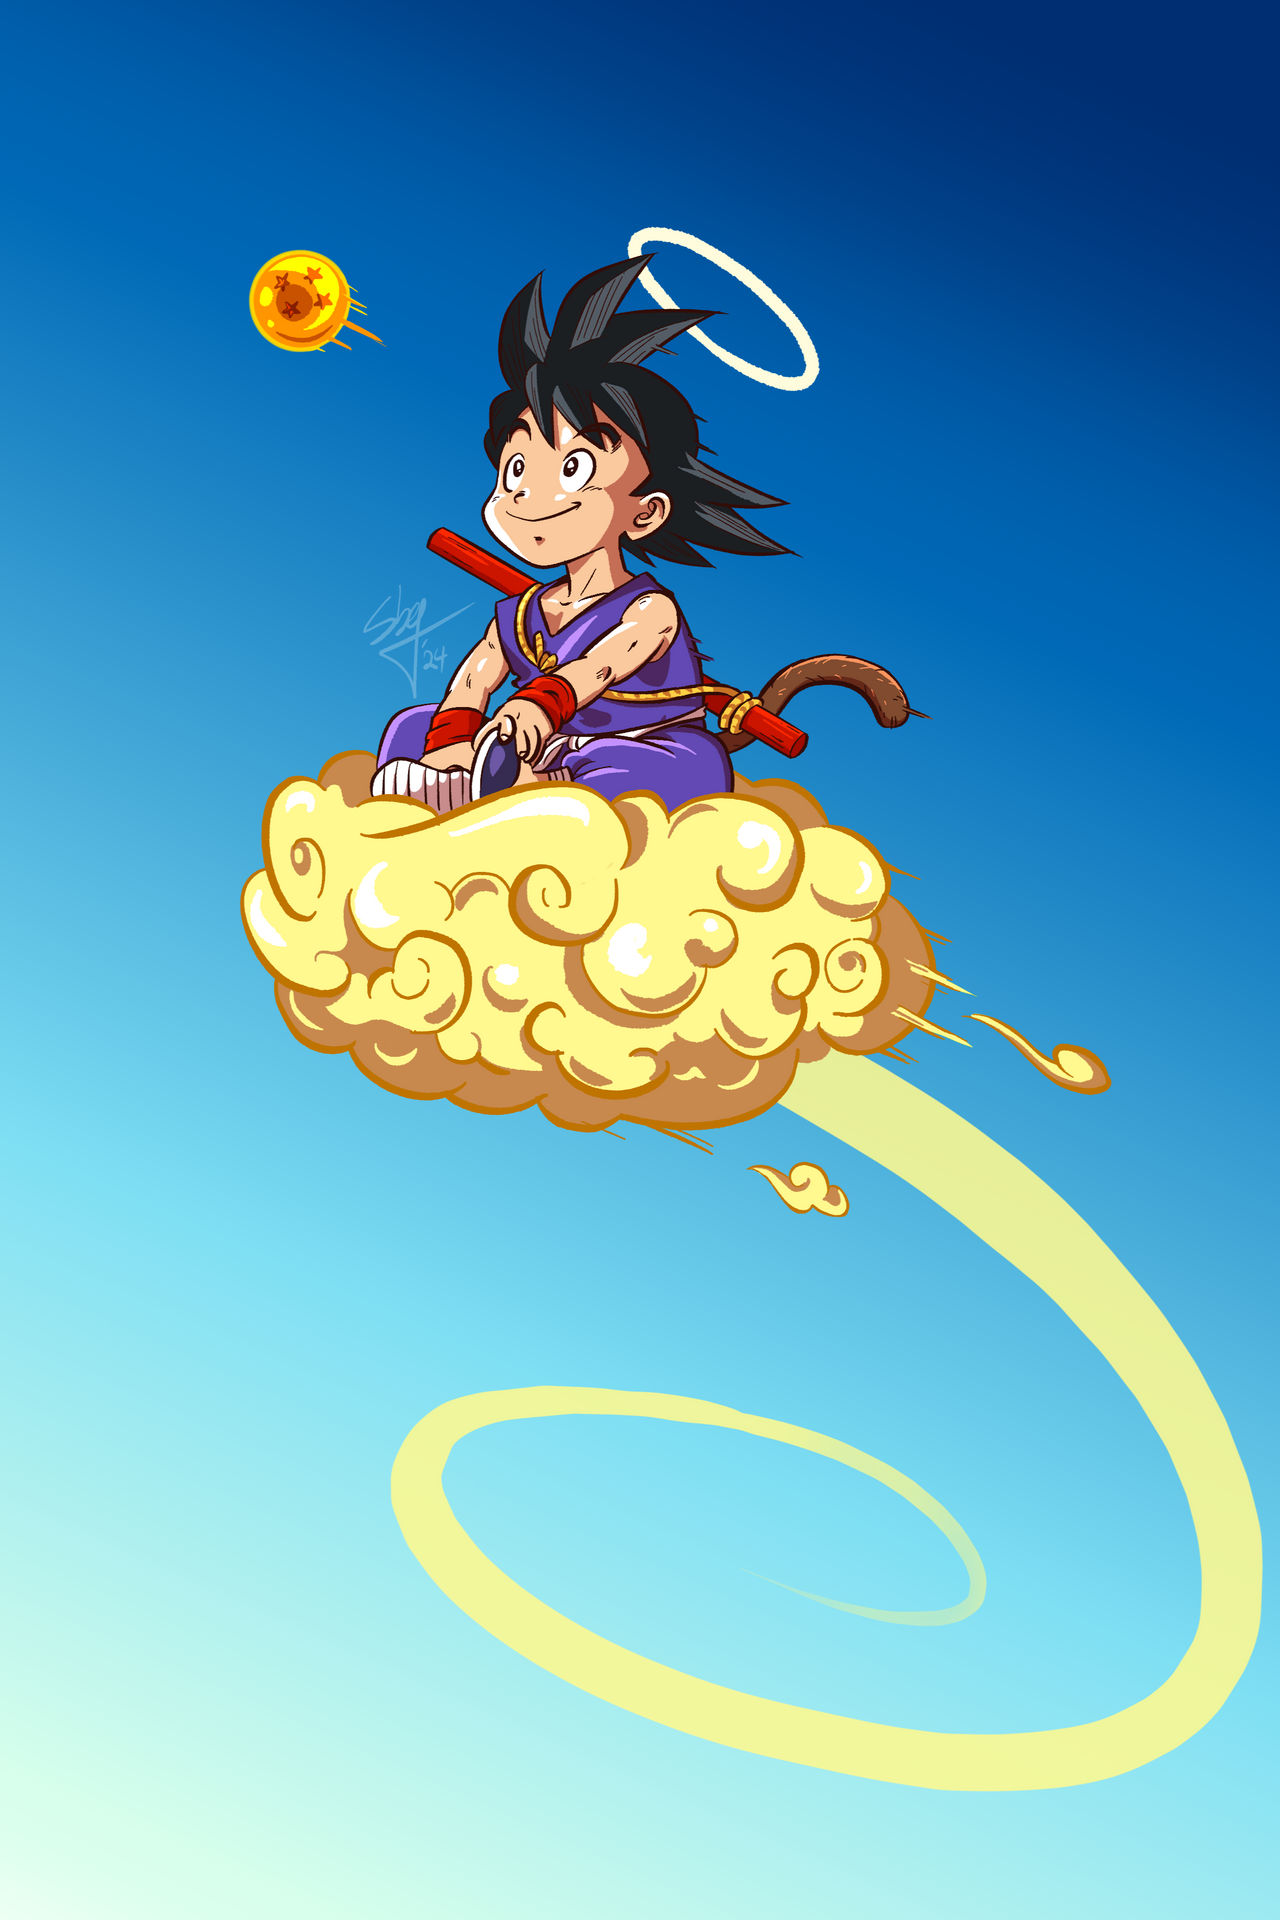 Son Goku - Dragon Ball Daima by mSandc on DeviantArt